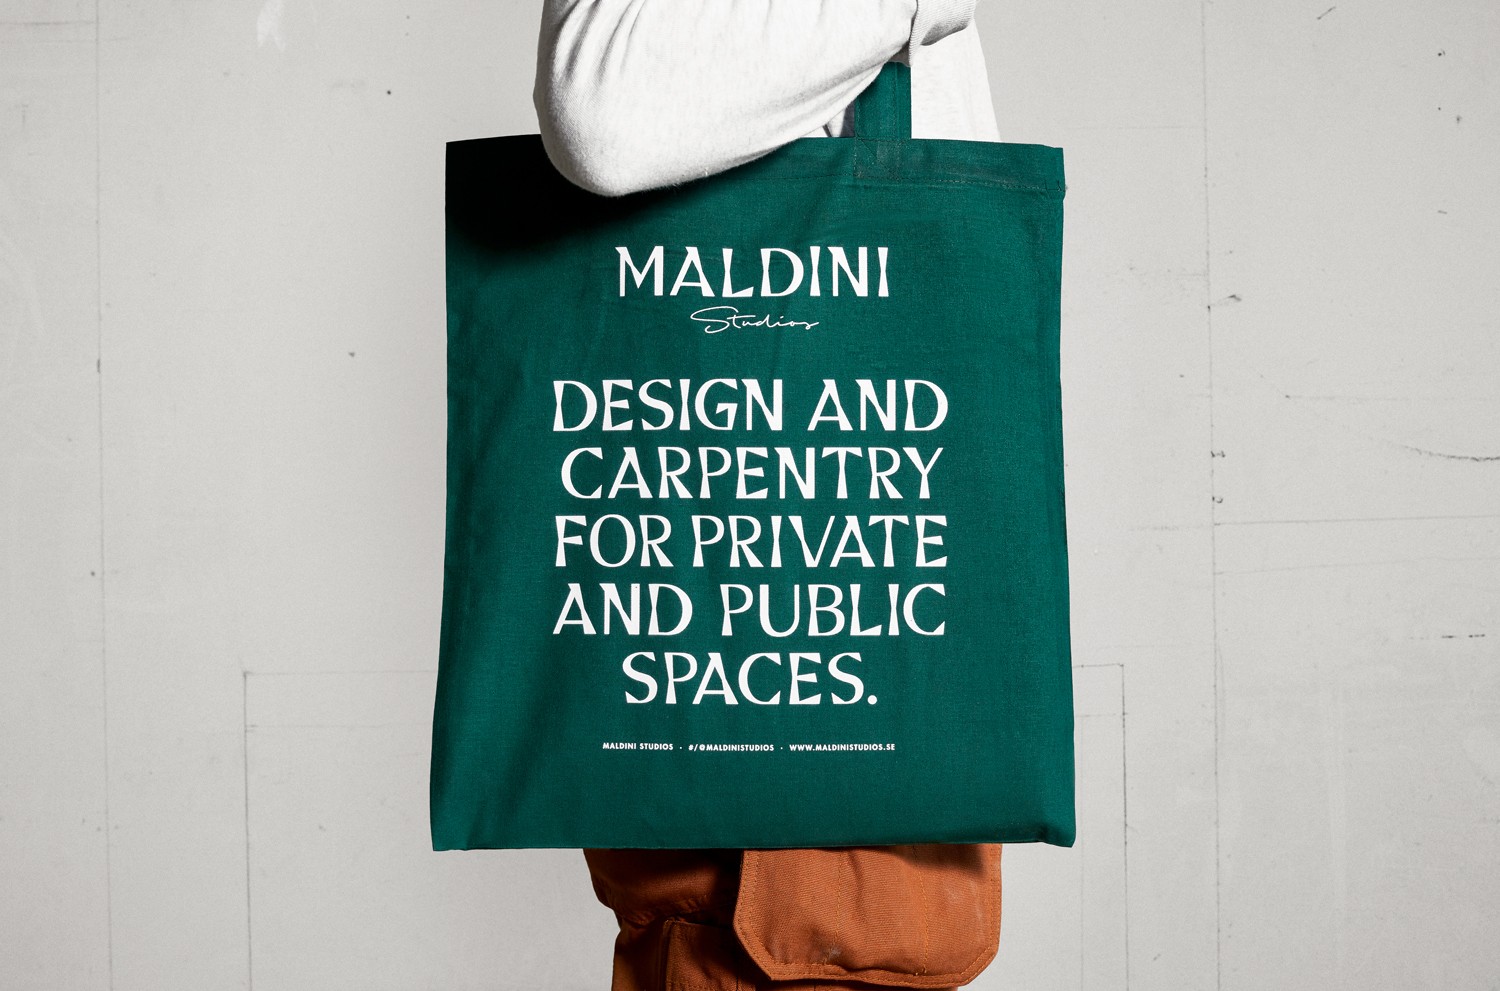 10-maldini-studios-interior-design-carpentry-stockholm-sweden-tote-bags-jens-nilsson-bpo.jpg